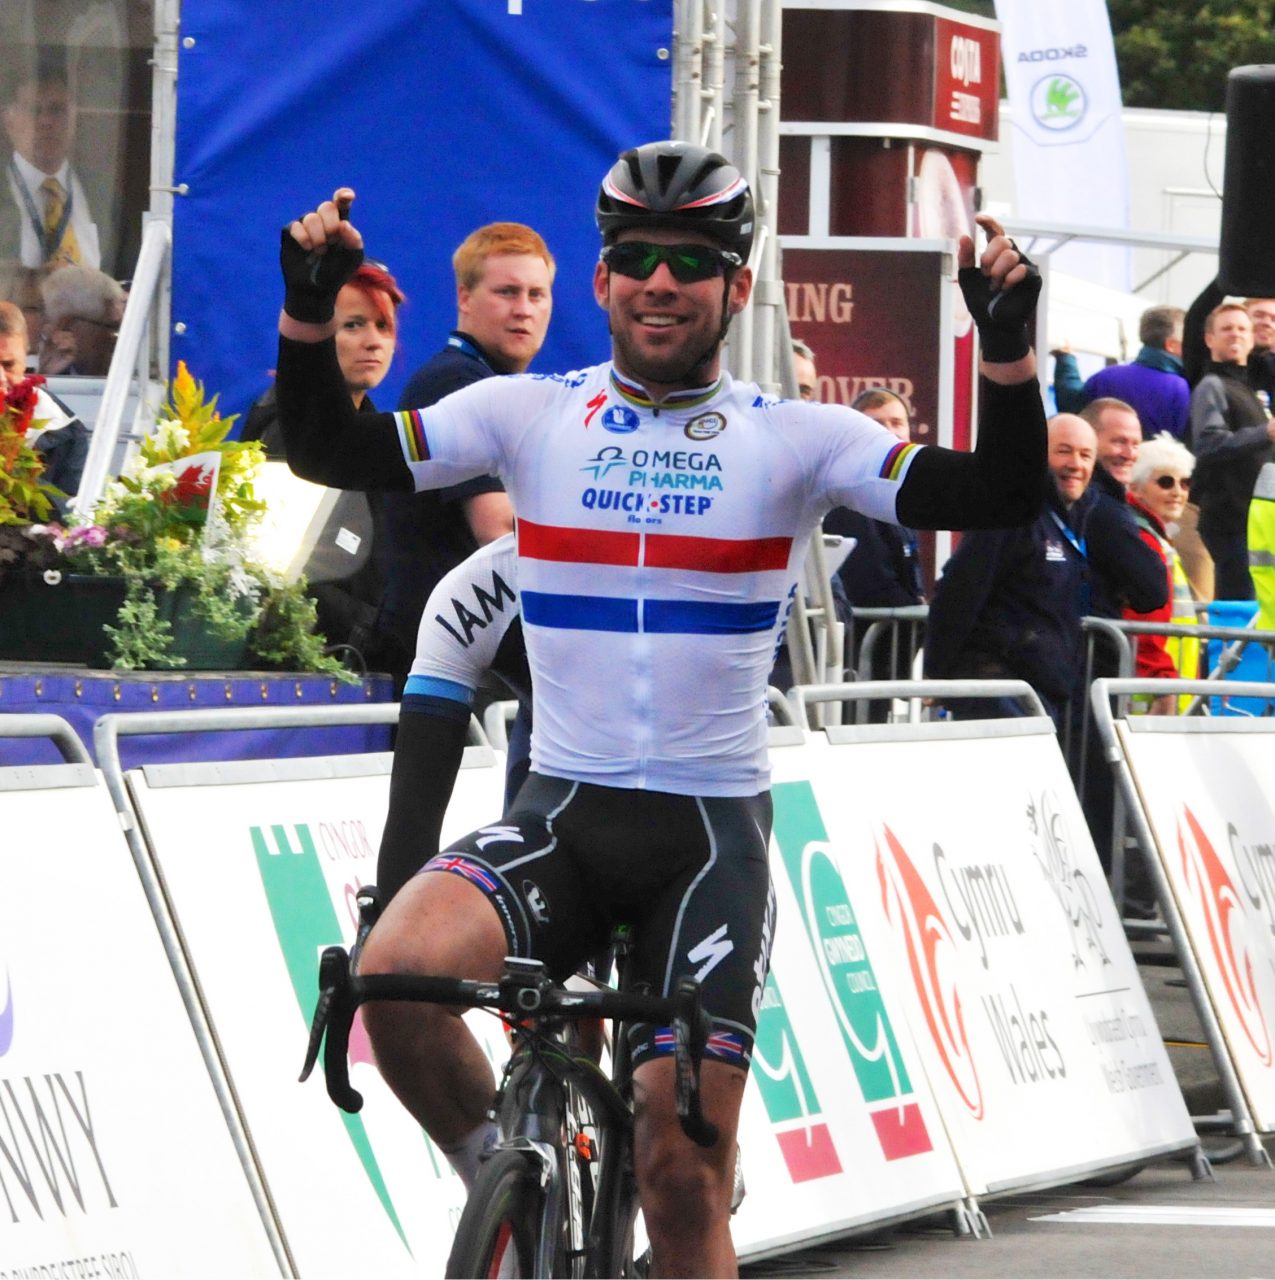 Tour of Britain #4 : Cavendish dgaine  son tour